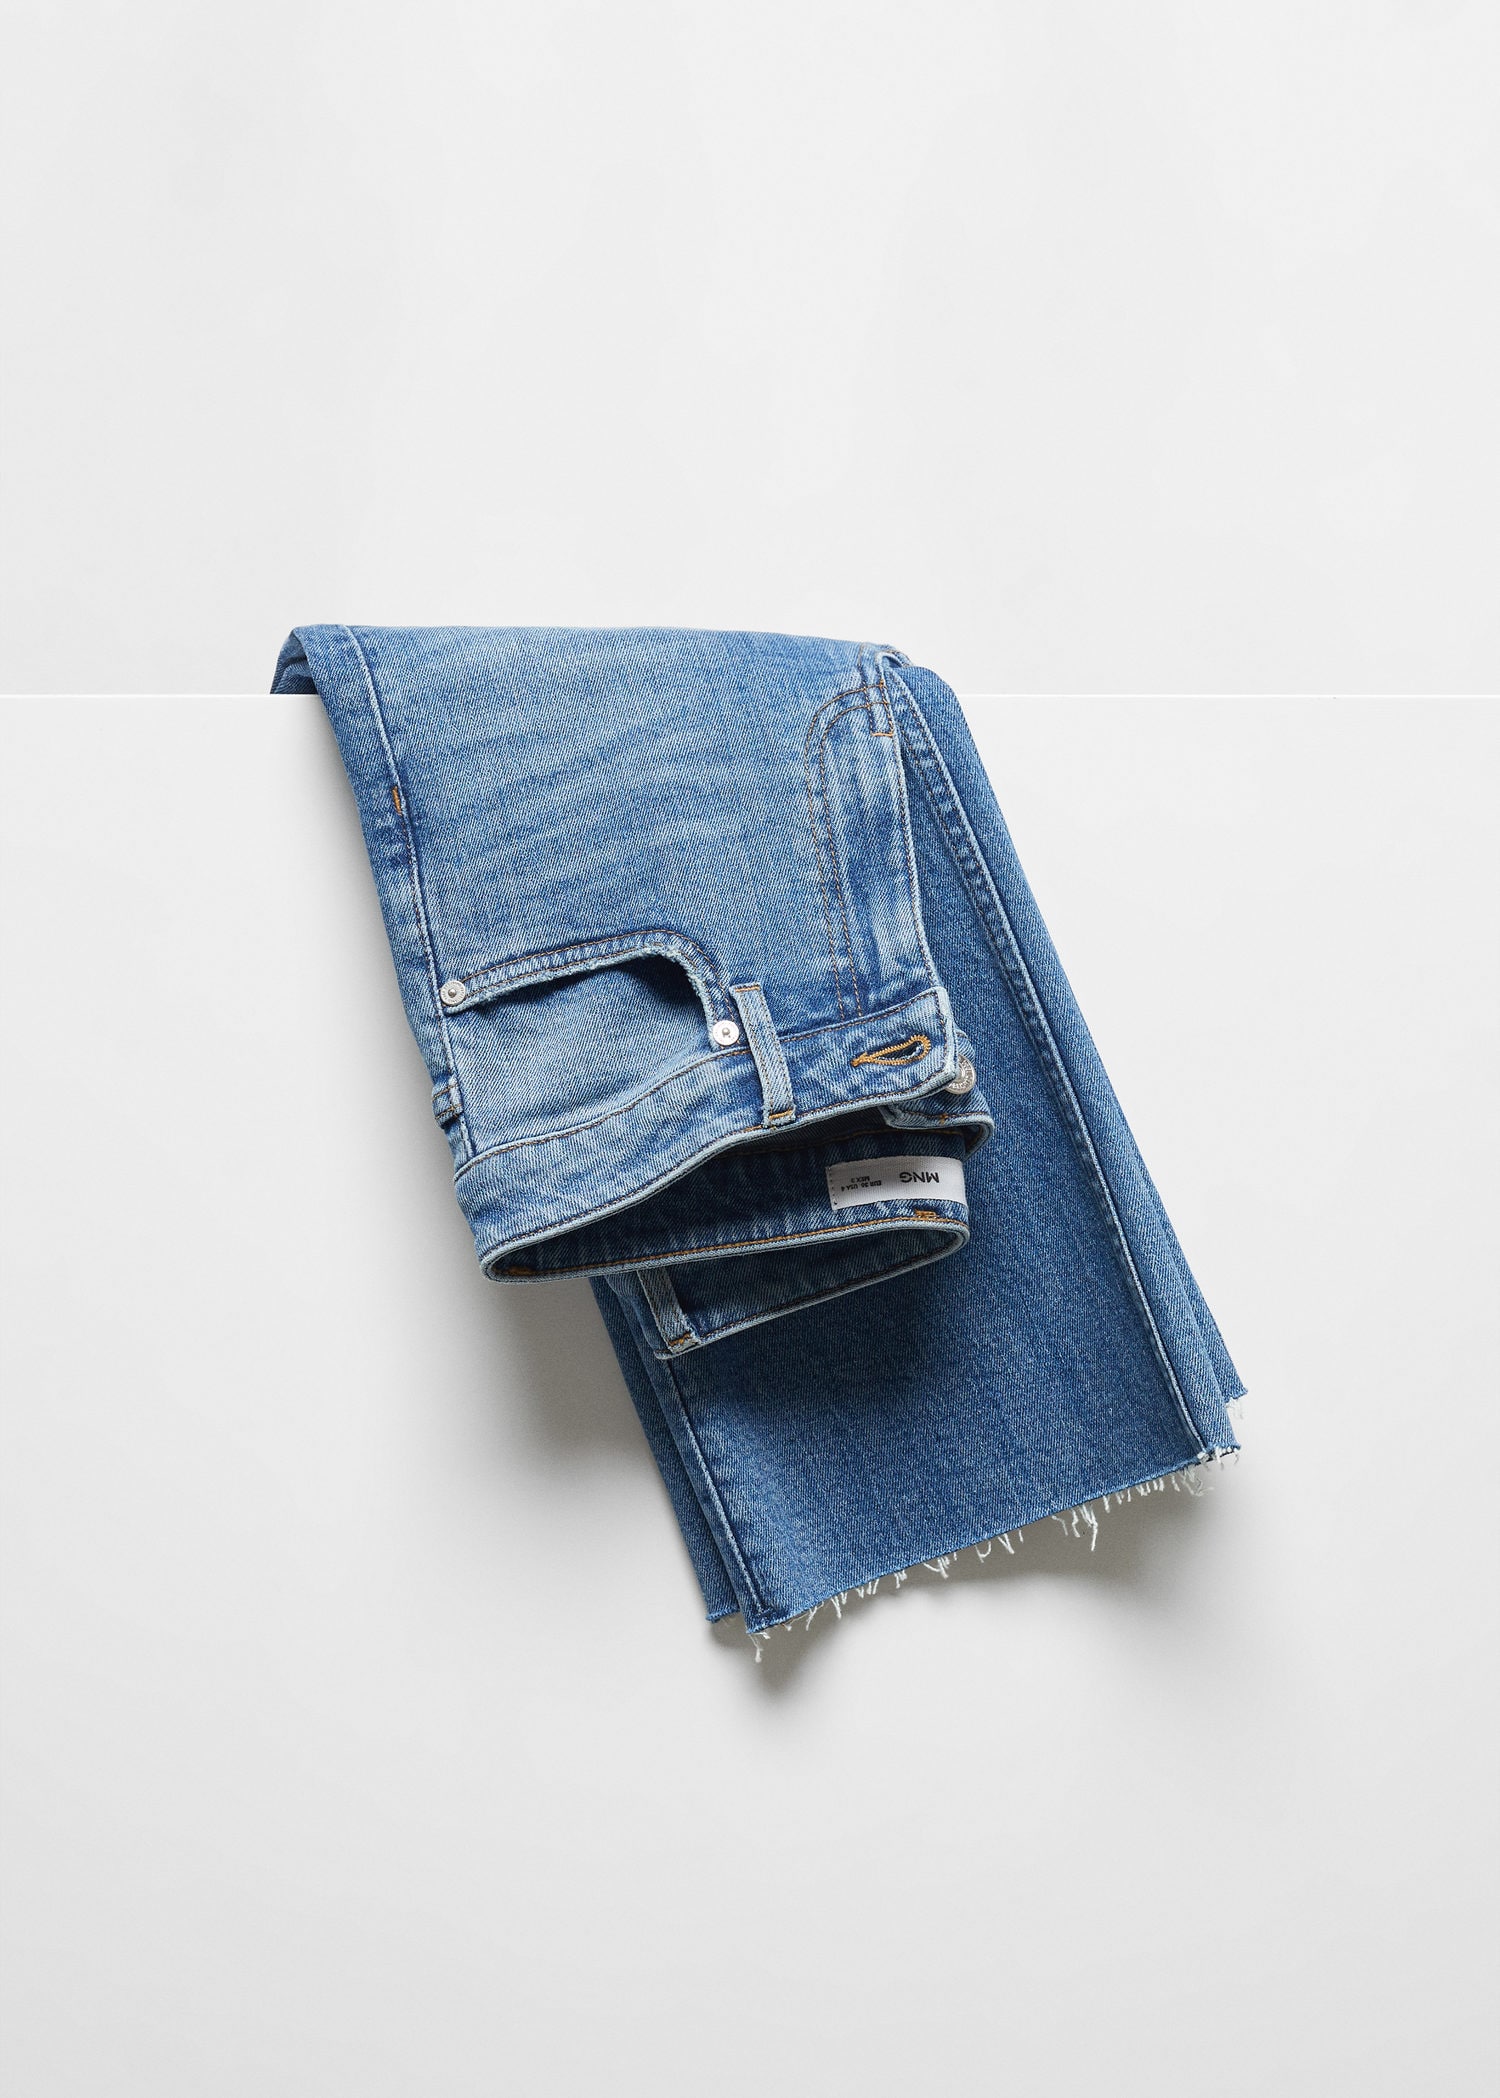 Medium-rise flared jeans | MANGO